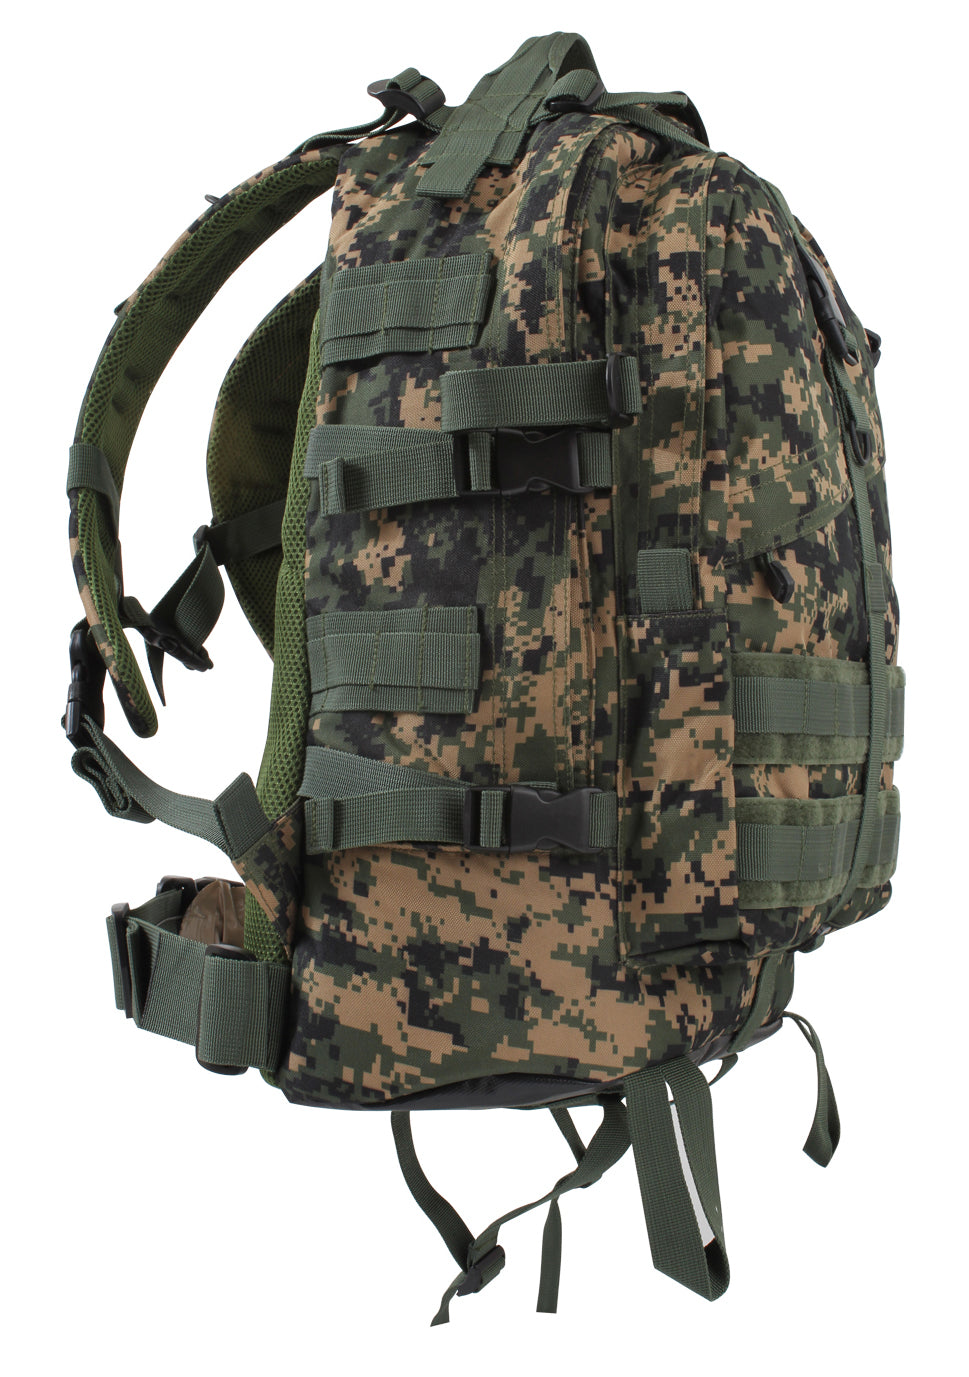 Milspec Large Camo Transport Pack Bug Out Bag Collection MilTac Tactical Military Outdoor Gear Australia